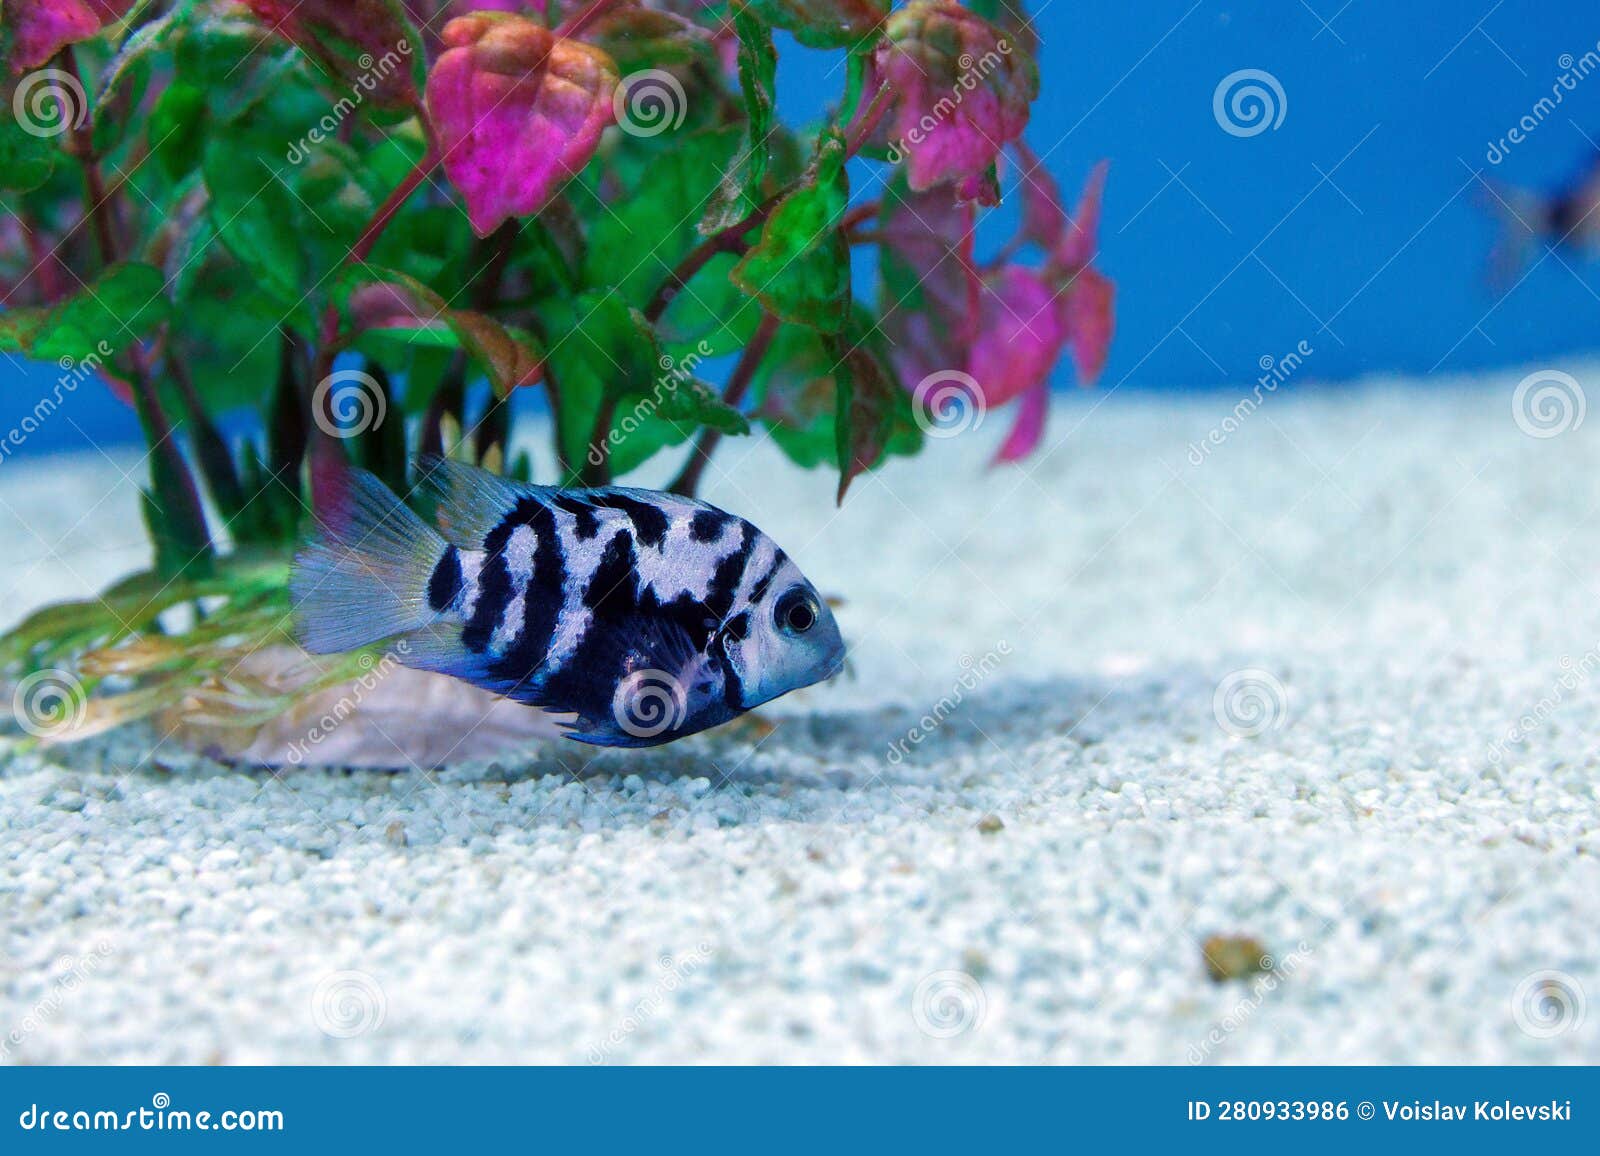 the convict cichlid fish - (amatitlania nigrofasciata)